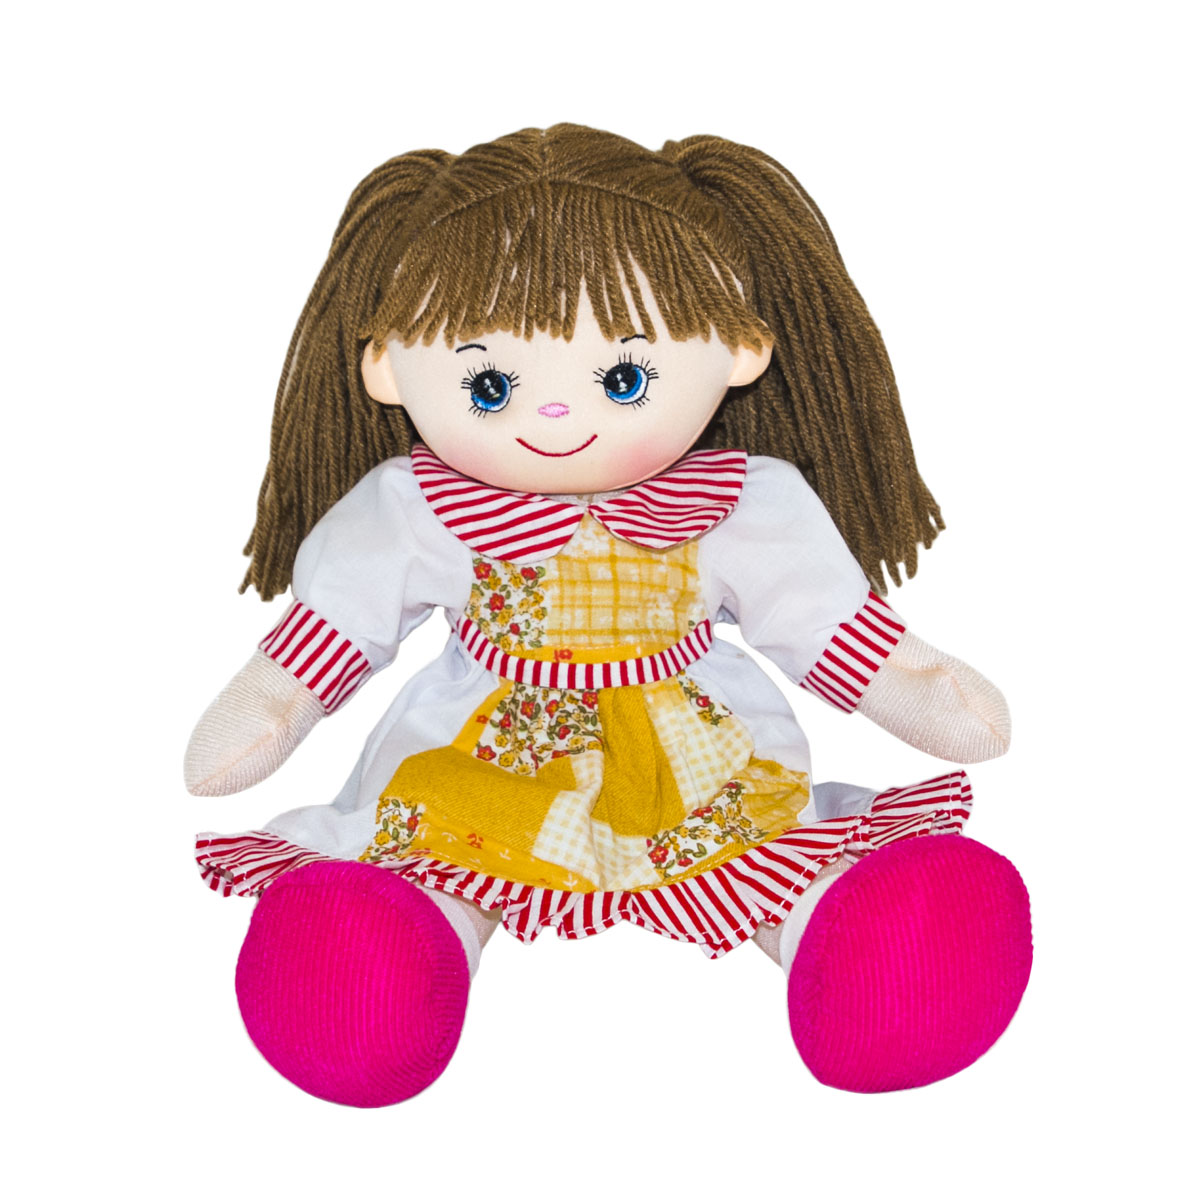 Куклы и другие игрушки. Gulliver кукла Смородинка,30см. Кукла Смородинка 30 см. Кукла Гулливер мягконабивная. Кукла Gulliver Хозяюшка 30 см.